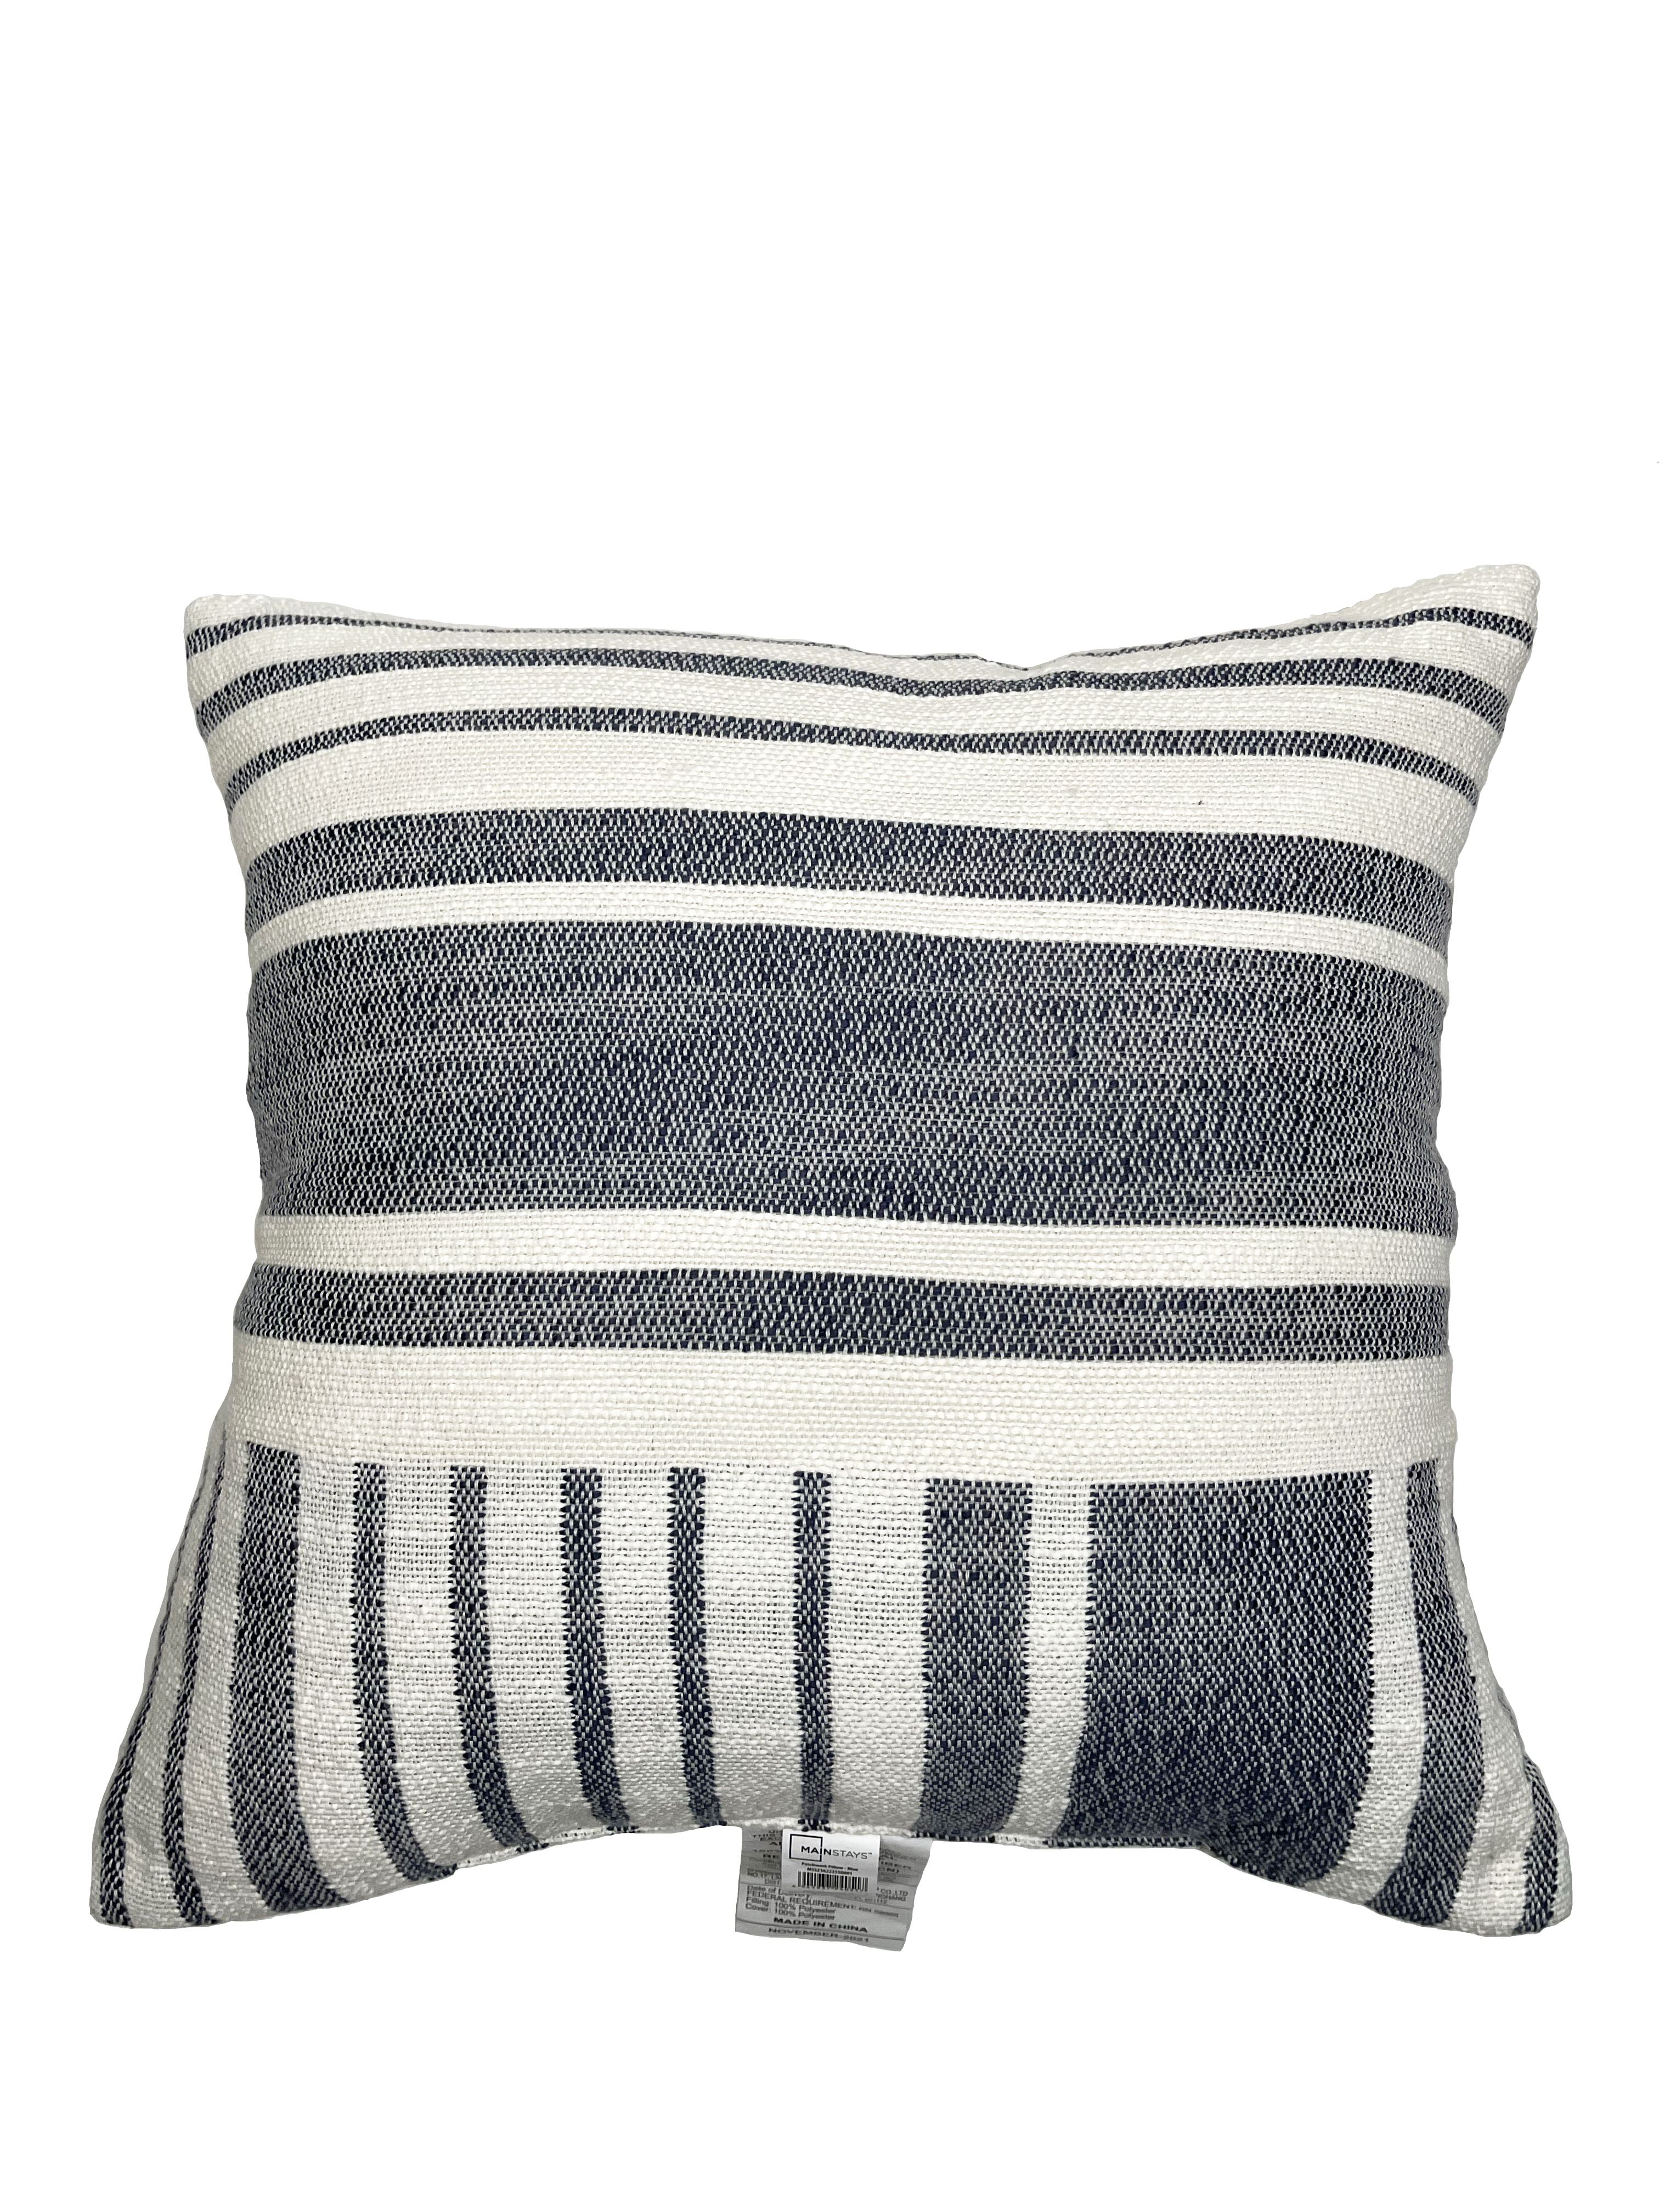 Mainstays Patchwork Decorative Pillow, Square, 20"x20", White/Blue